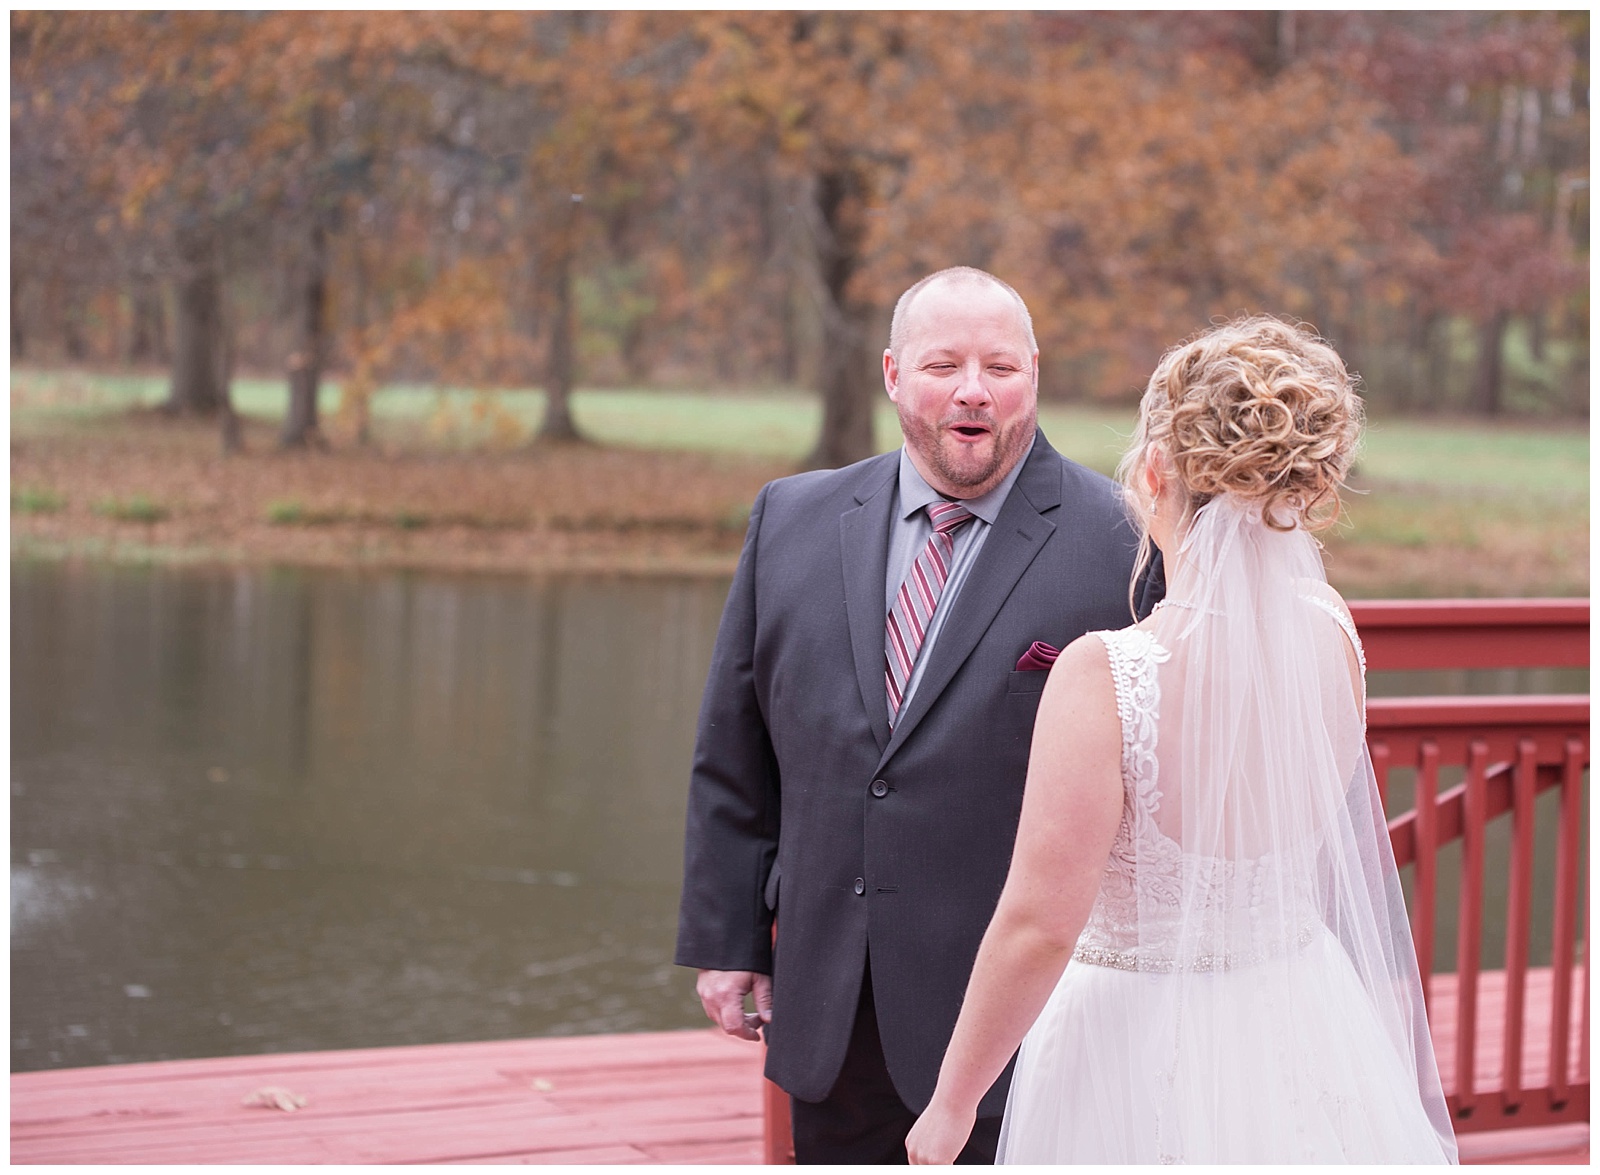 Cincinnati Fall Wedding | Monica Brown Photography | monicabrownphoto.com